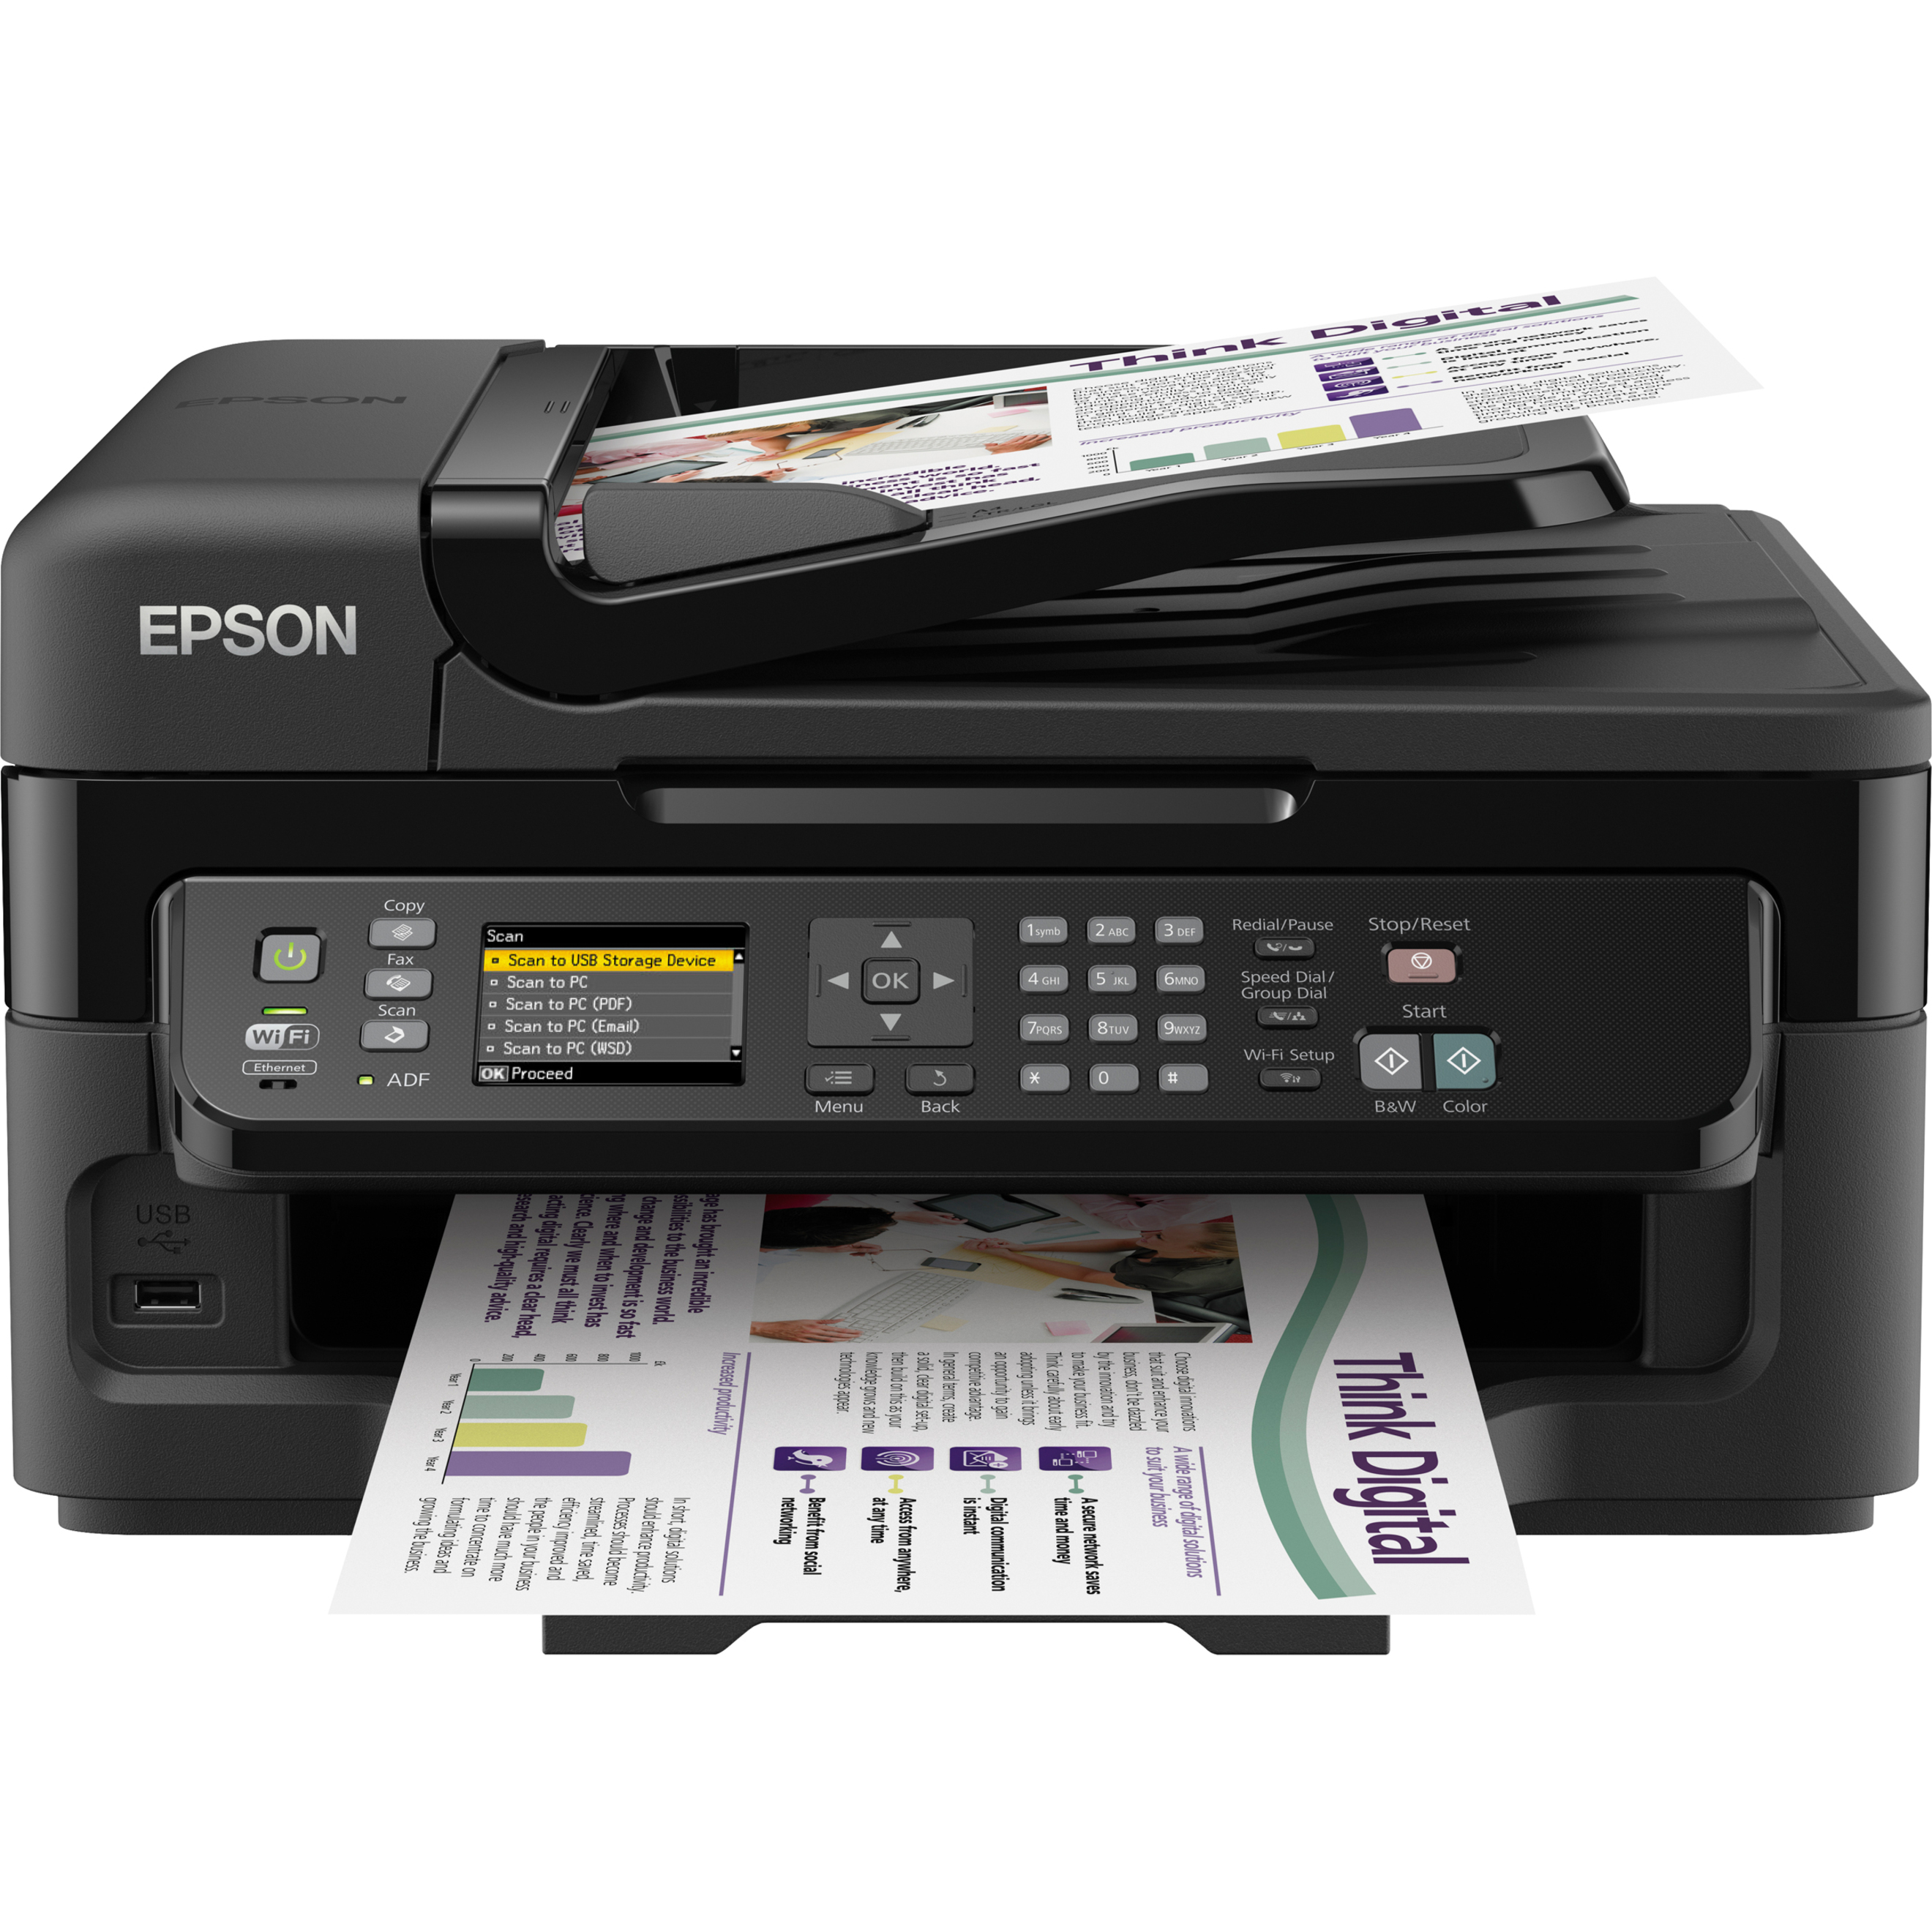 Epson WorkForce WF-2540 Wireless Inkjet Multifunction Printer, Color - image 3 of 4